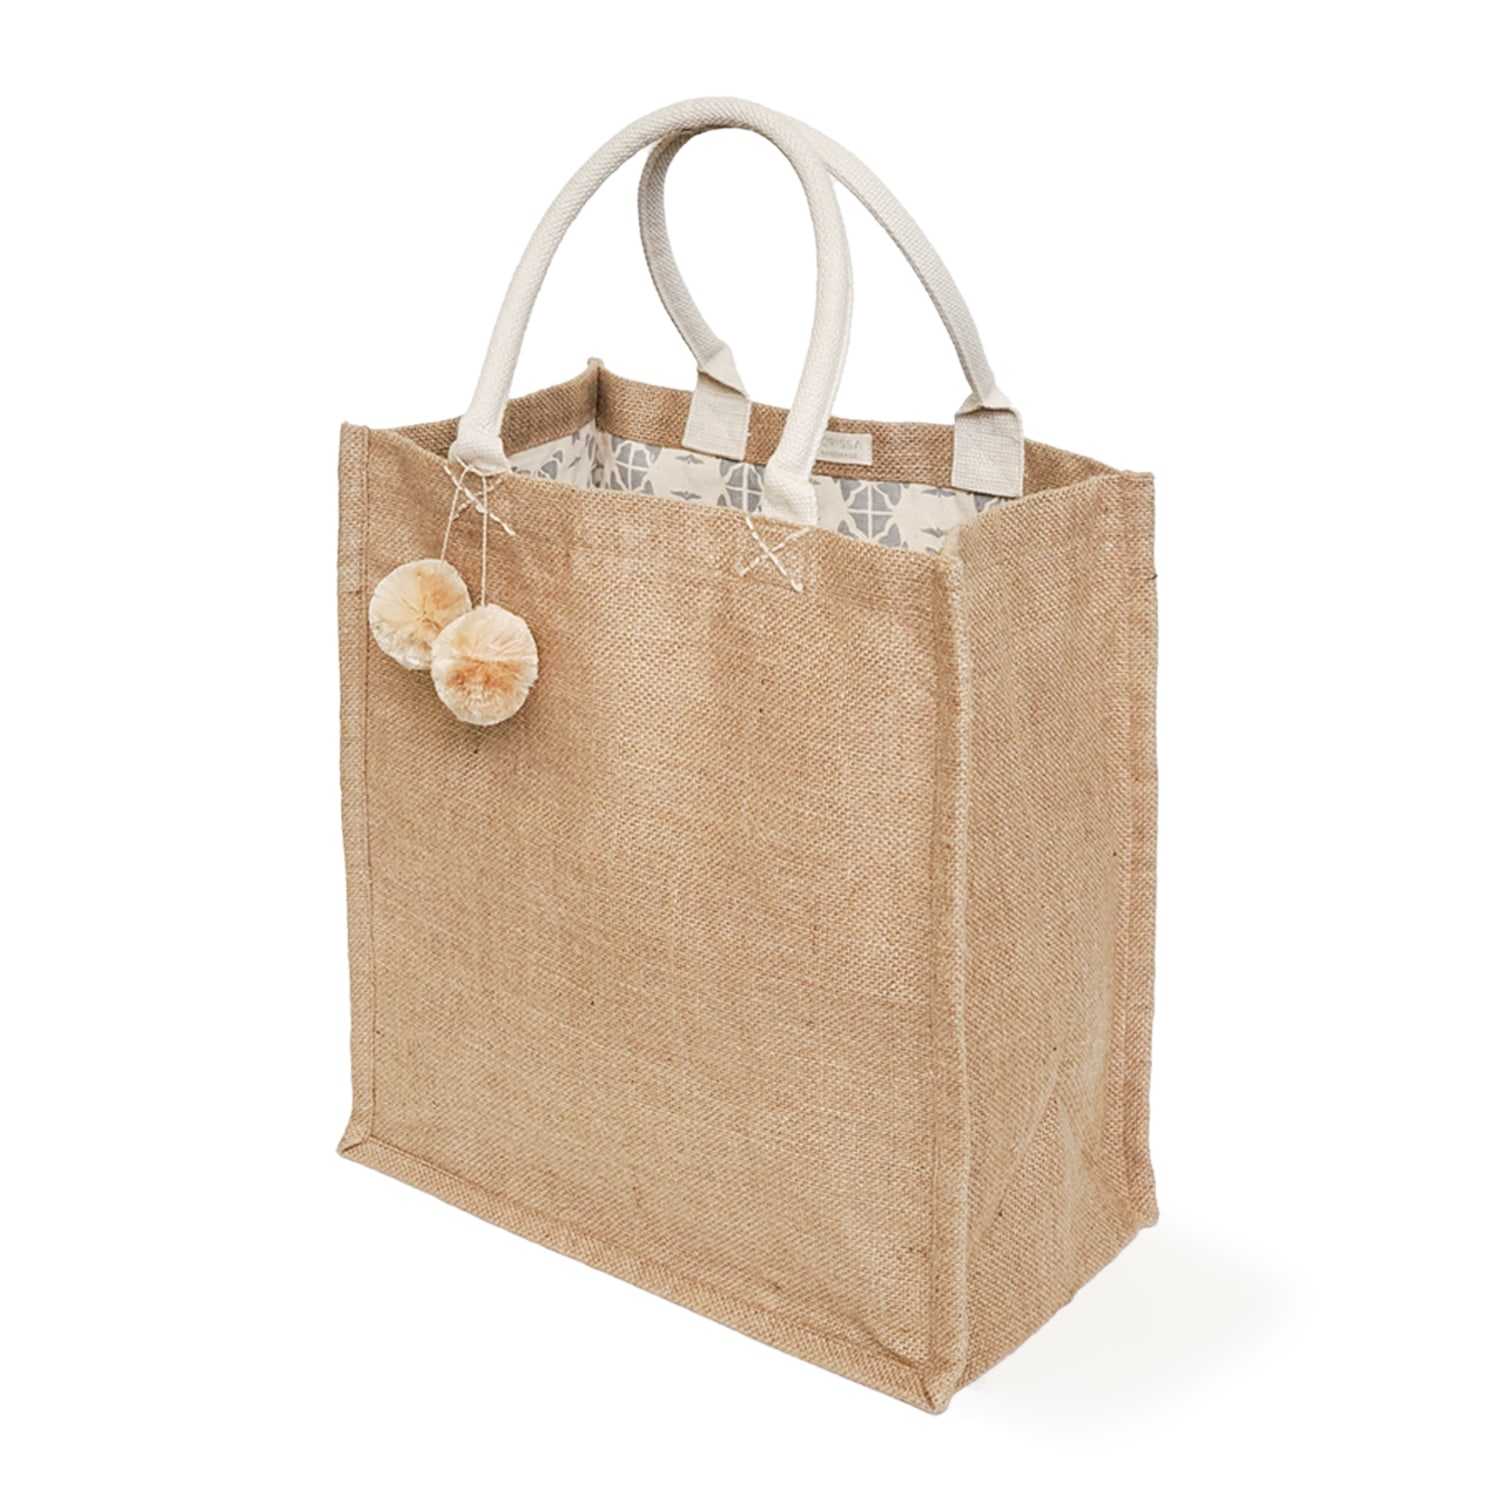 Korissa Jute Canvas Market Bag With Pompom In Gray/white